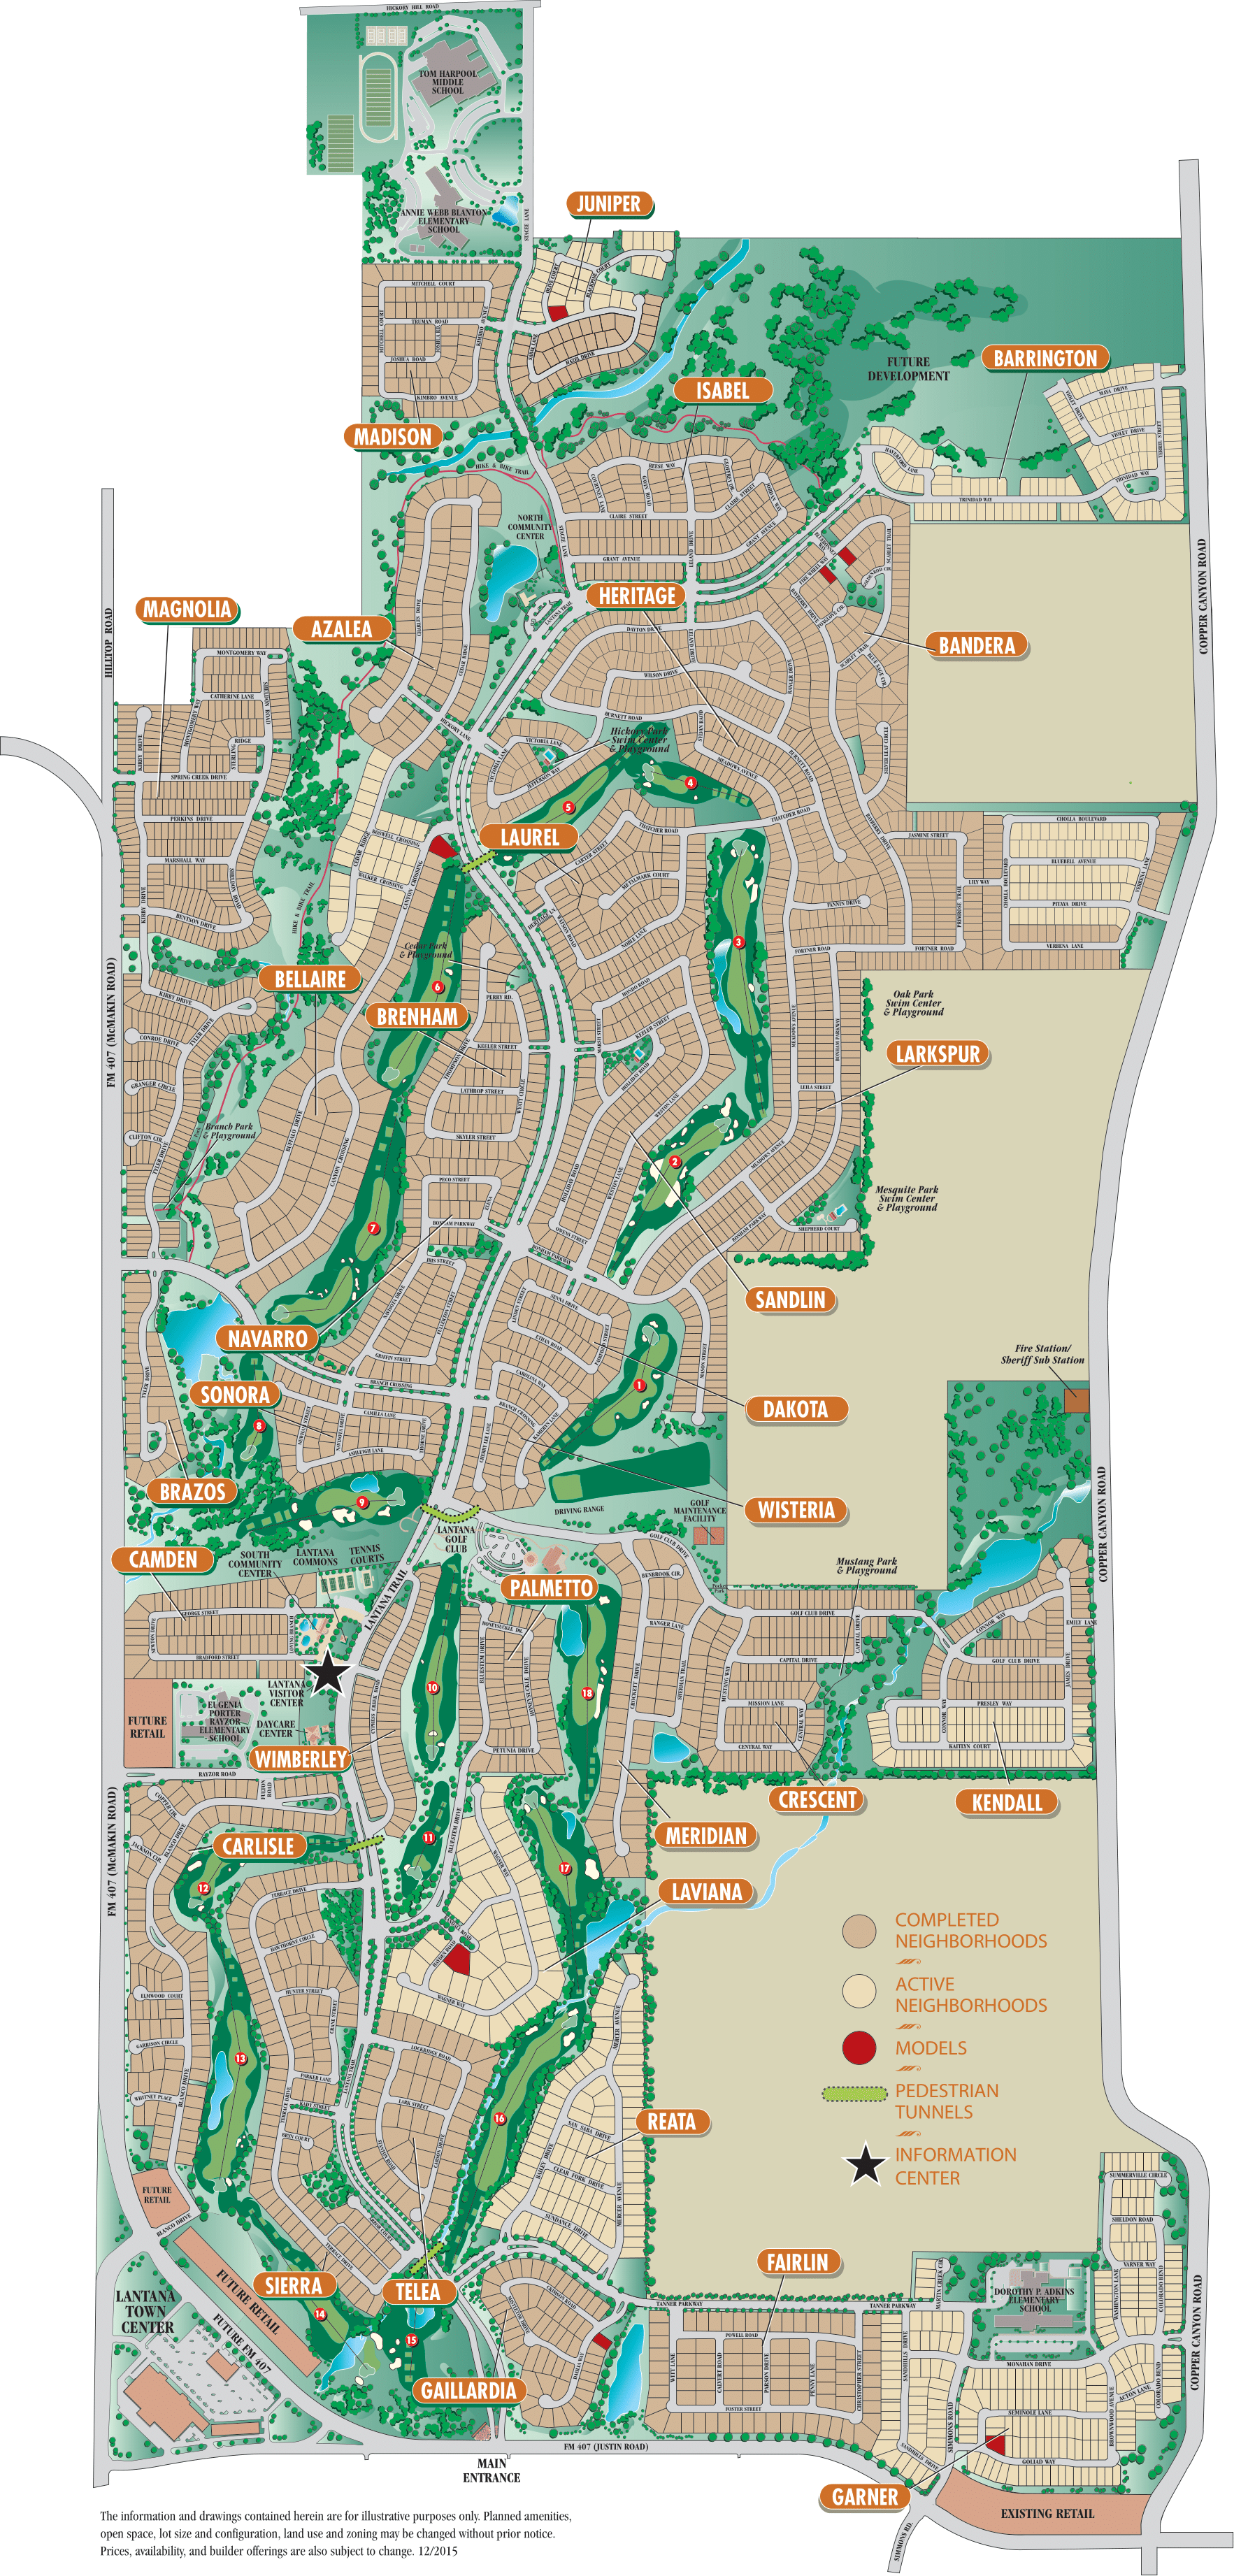 Lantana Site Plan showing neighborhoods